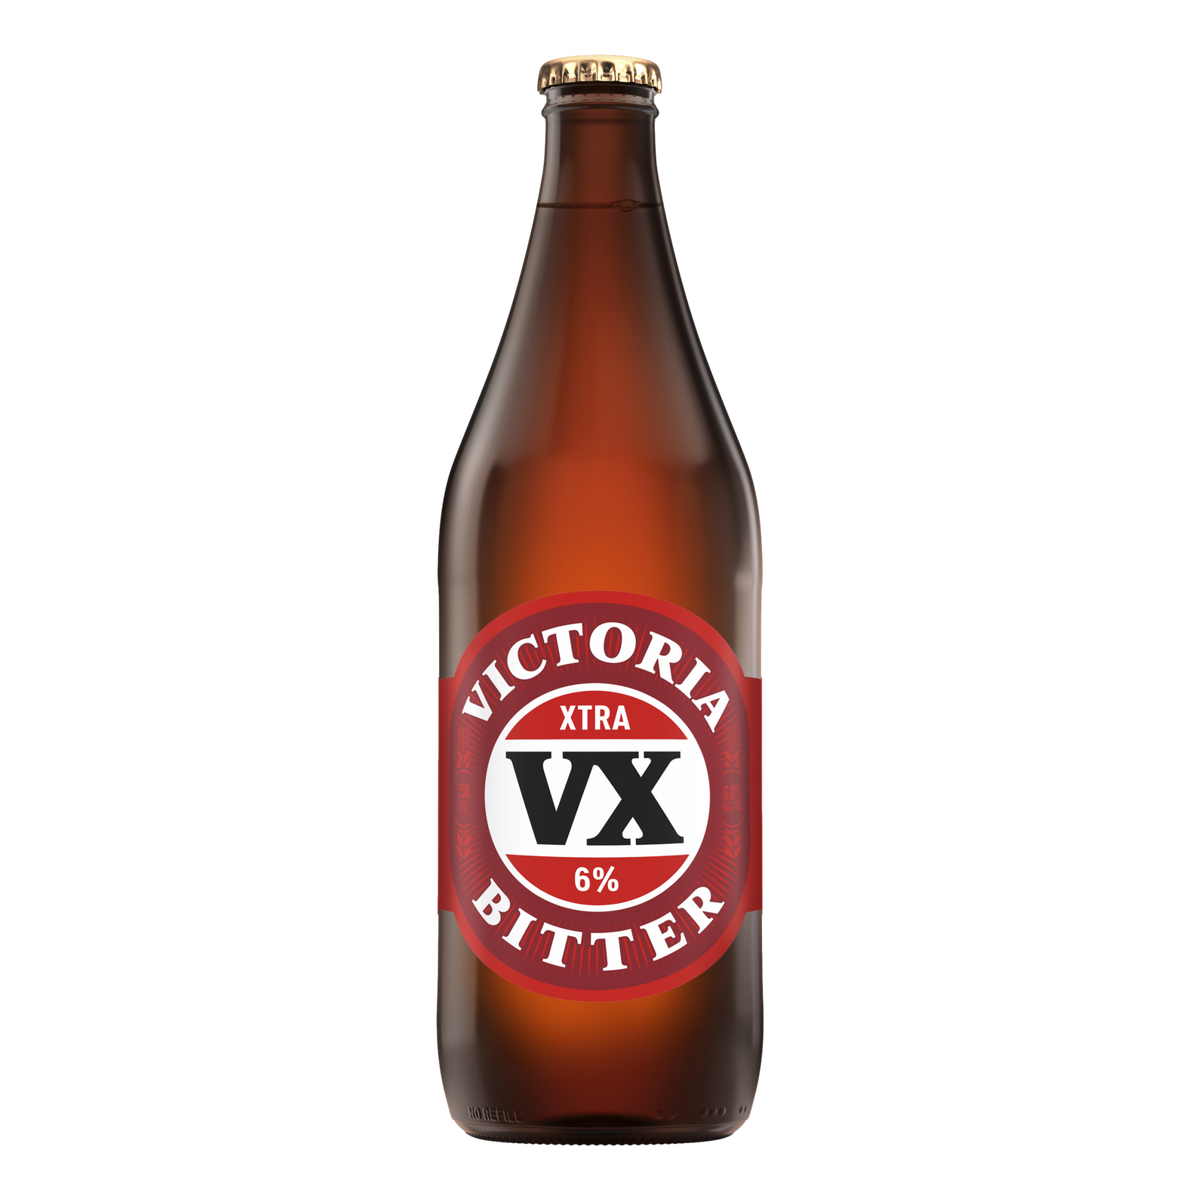 Victoria Bitter XTRA VX Lager 6% 750ml Bottle Case of 12